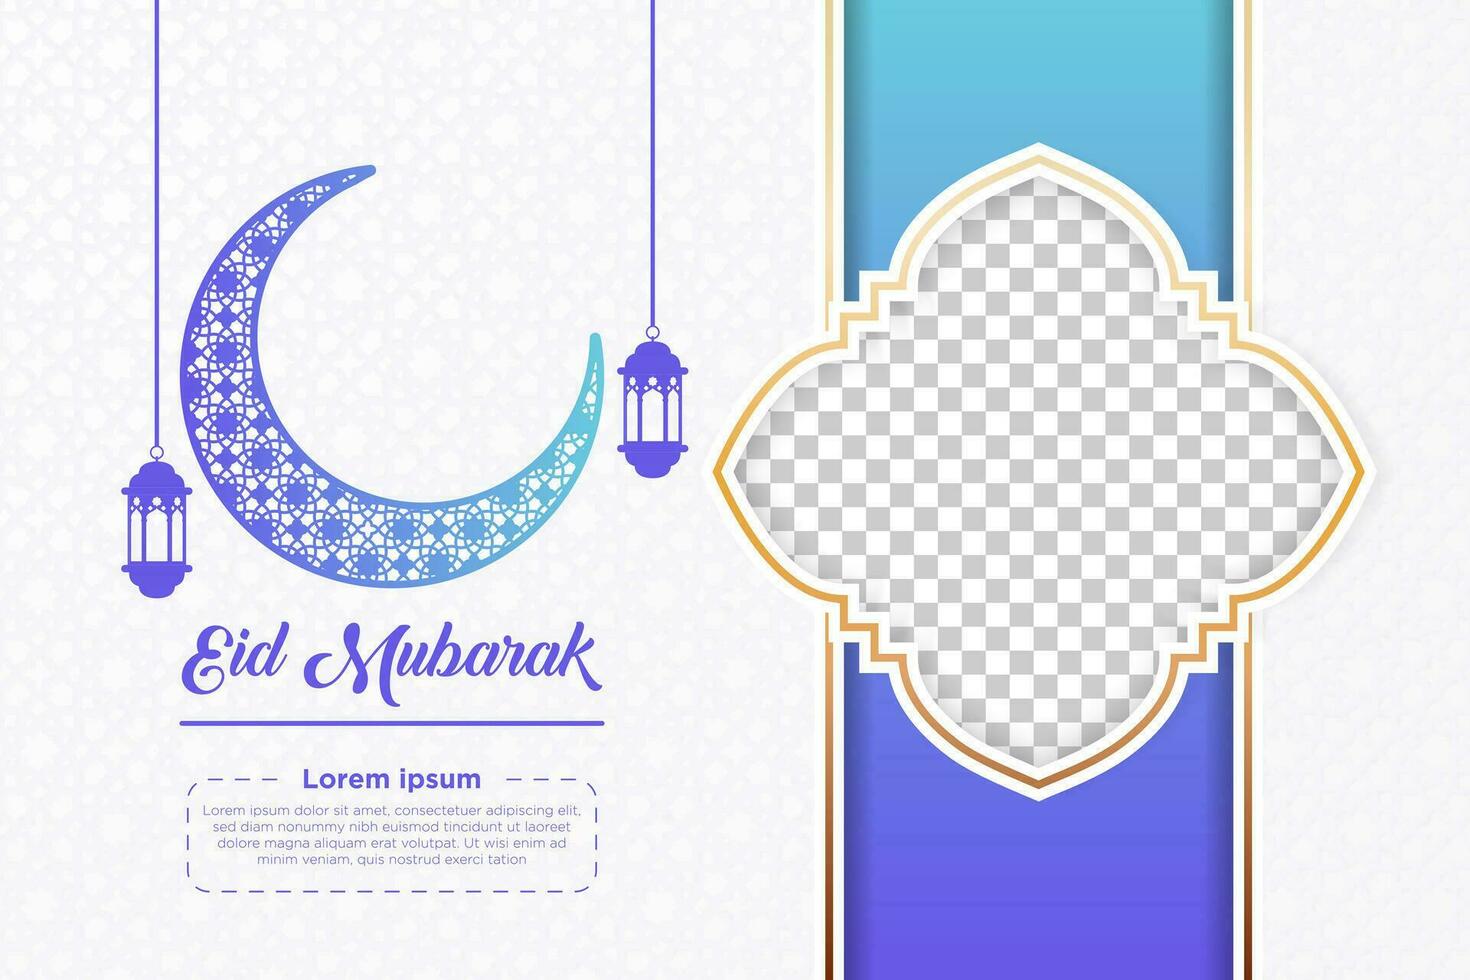 New Eid Mubarak Greetings Template Design. Vector